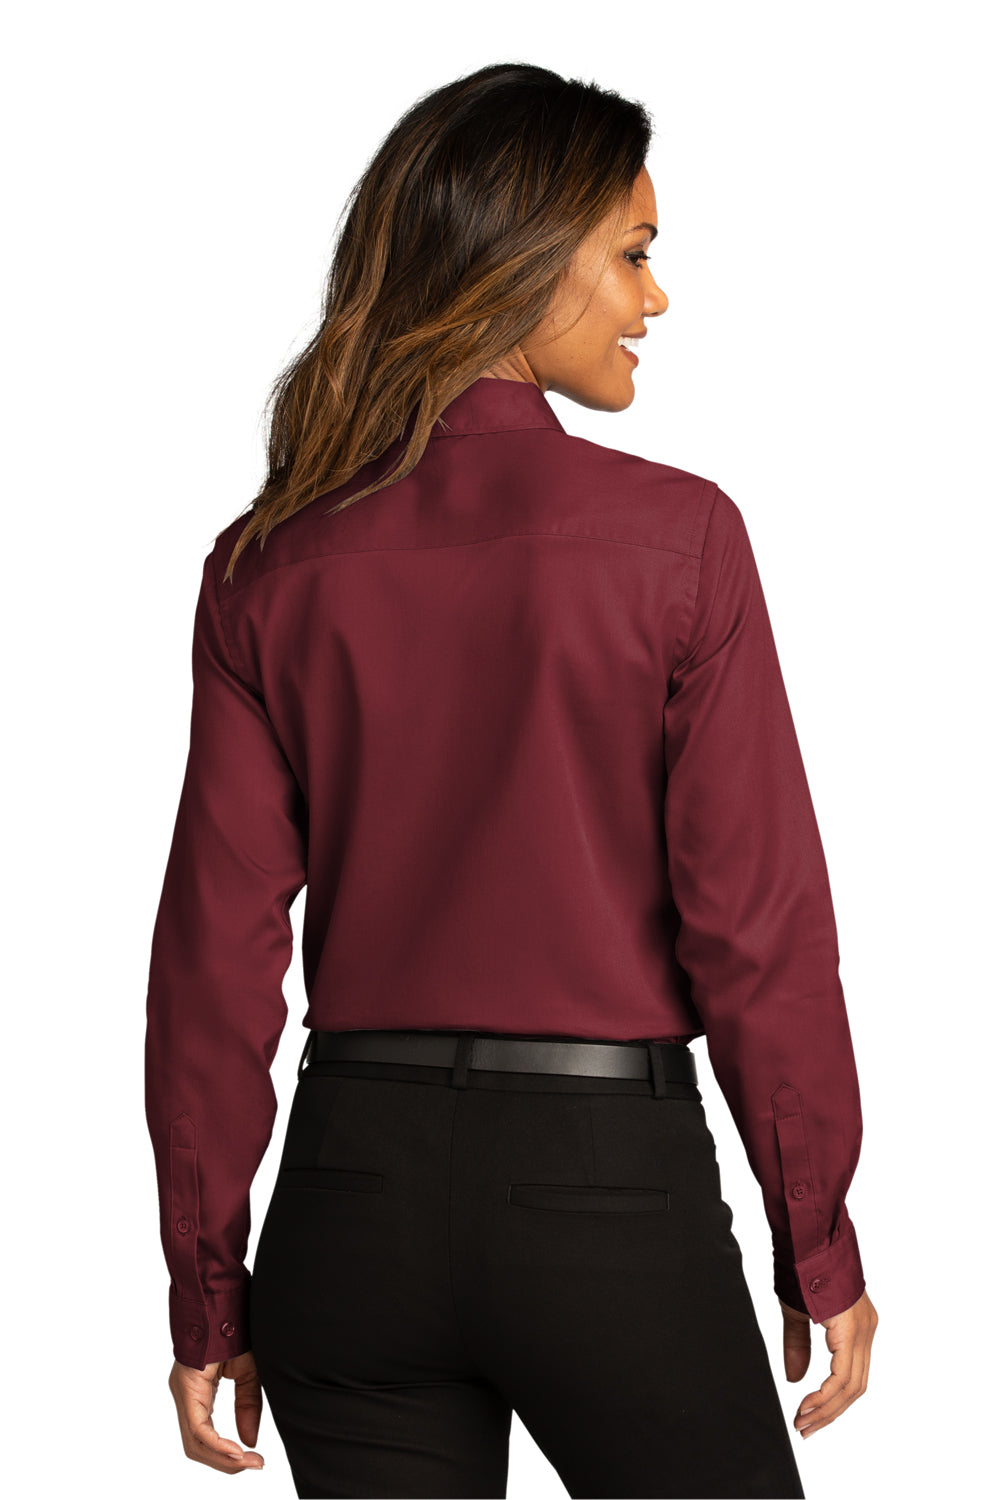 Port Authority Womens SuperPro React Long Sleeve Button Down Shirt Burgundy Side